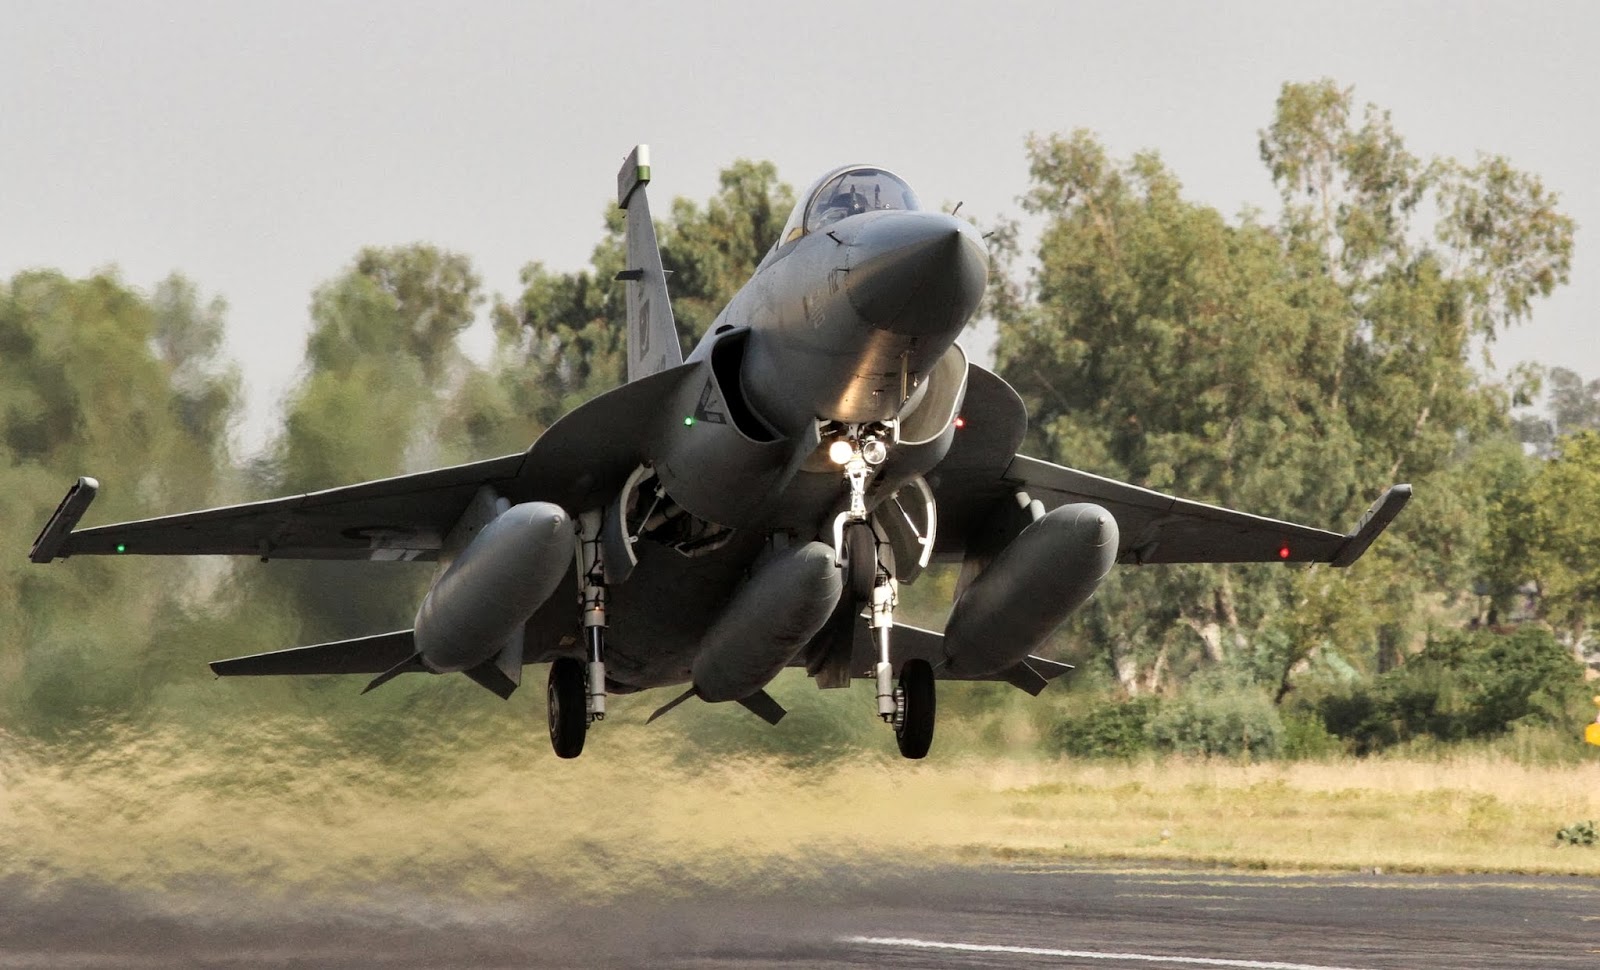 http://4.bp.blogspot.com/-KlB8hCXX_5Y/UoGN61XixuI/AAAAAAAAfz8/vOjZ840kQXM/s1600/JF-17+Thunder+from+No.+26+16+Squadron+Black+Panthers++Pakistan+Air+Force+(PAF)+fighter+duabi+air+show+Pakistan+Air+Force180km+range+C-802A+Anti-ship+Missile,+SD-10A+BVRAAM,+PL-5E+II+WVRAAMLS-6+LT-2LS-500Jcm400+201314151617+(1+(18).jpg